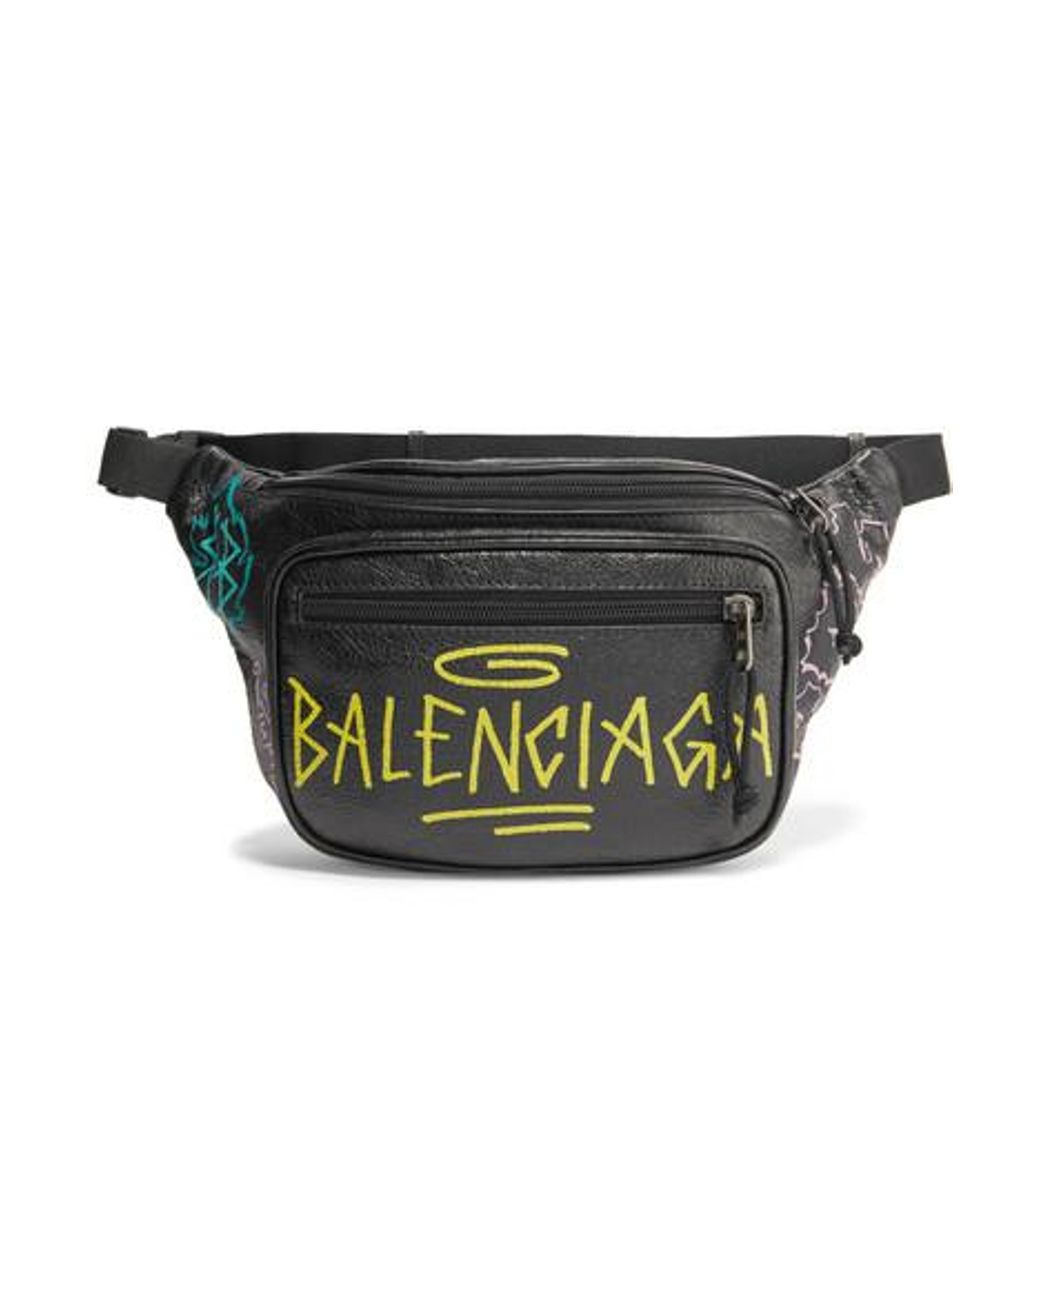 Balenciaga Explorer Graffiti Printed Textured-leather Belt Bag in Black ...